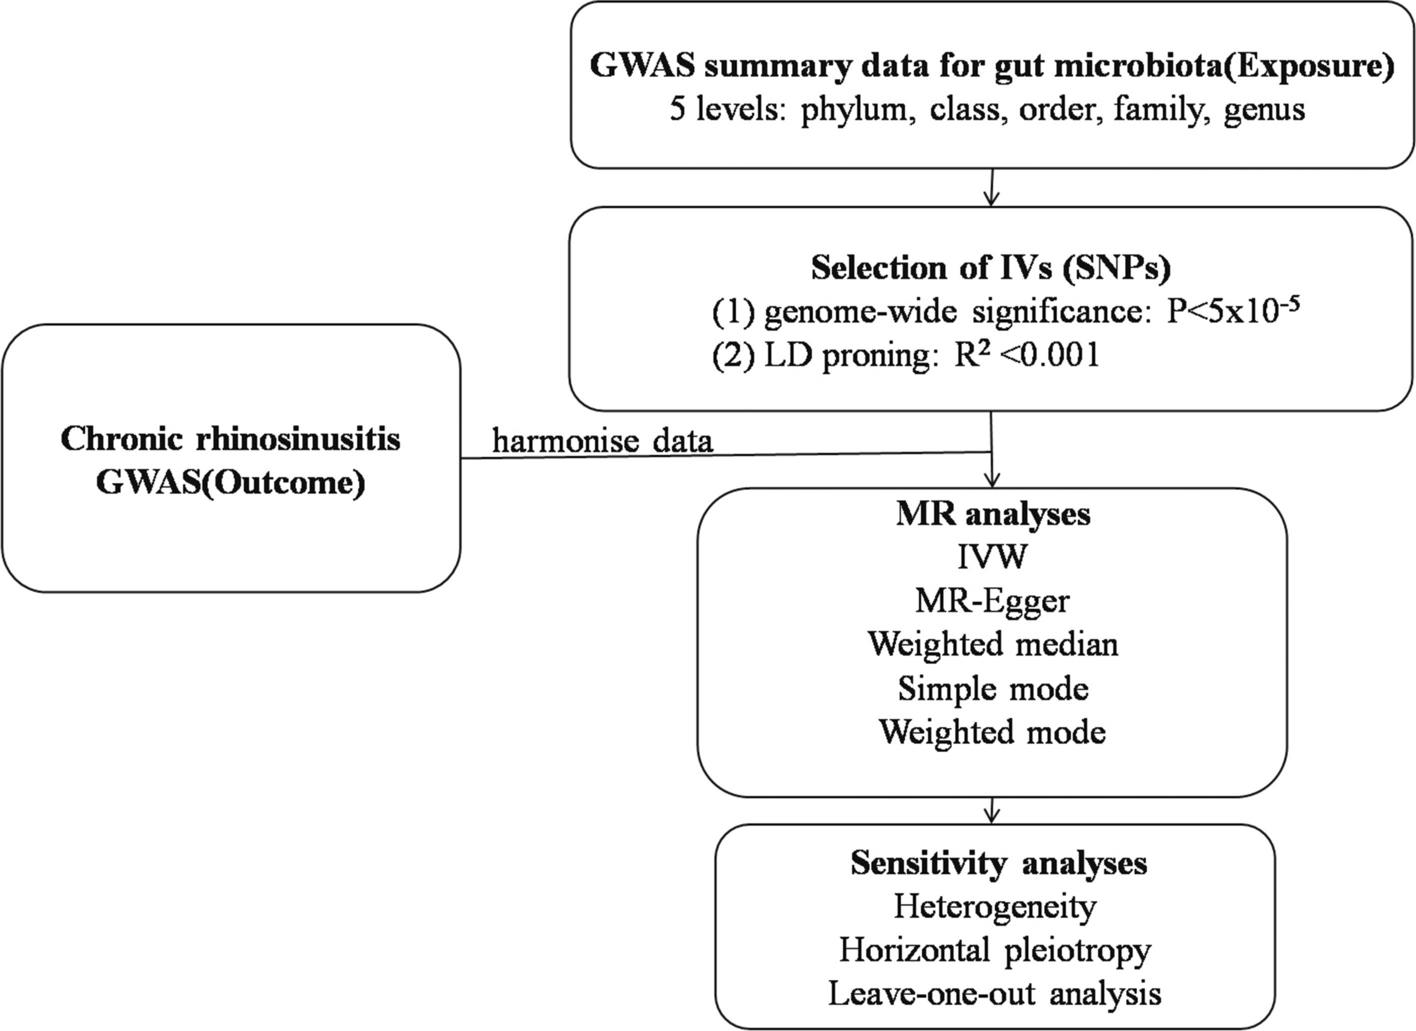 Gut microbiota and chronic rhinosinusitis: a two-sample Mendelian randomization study